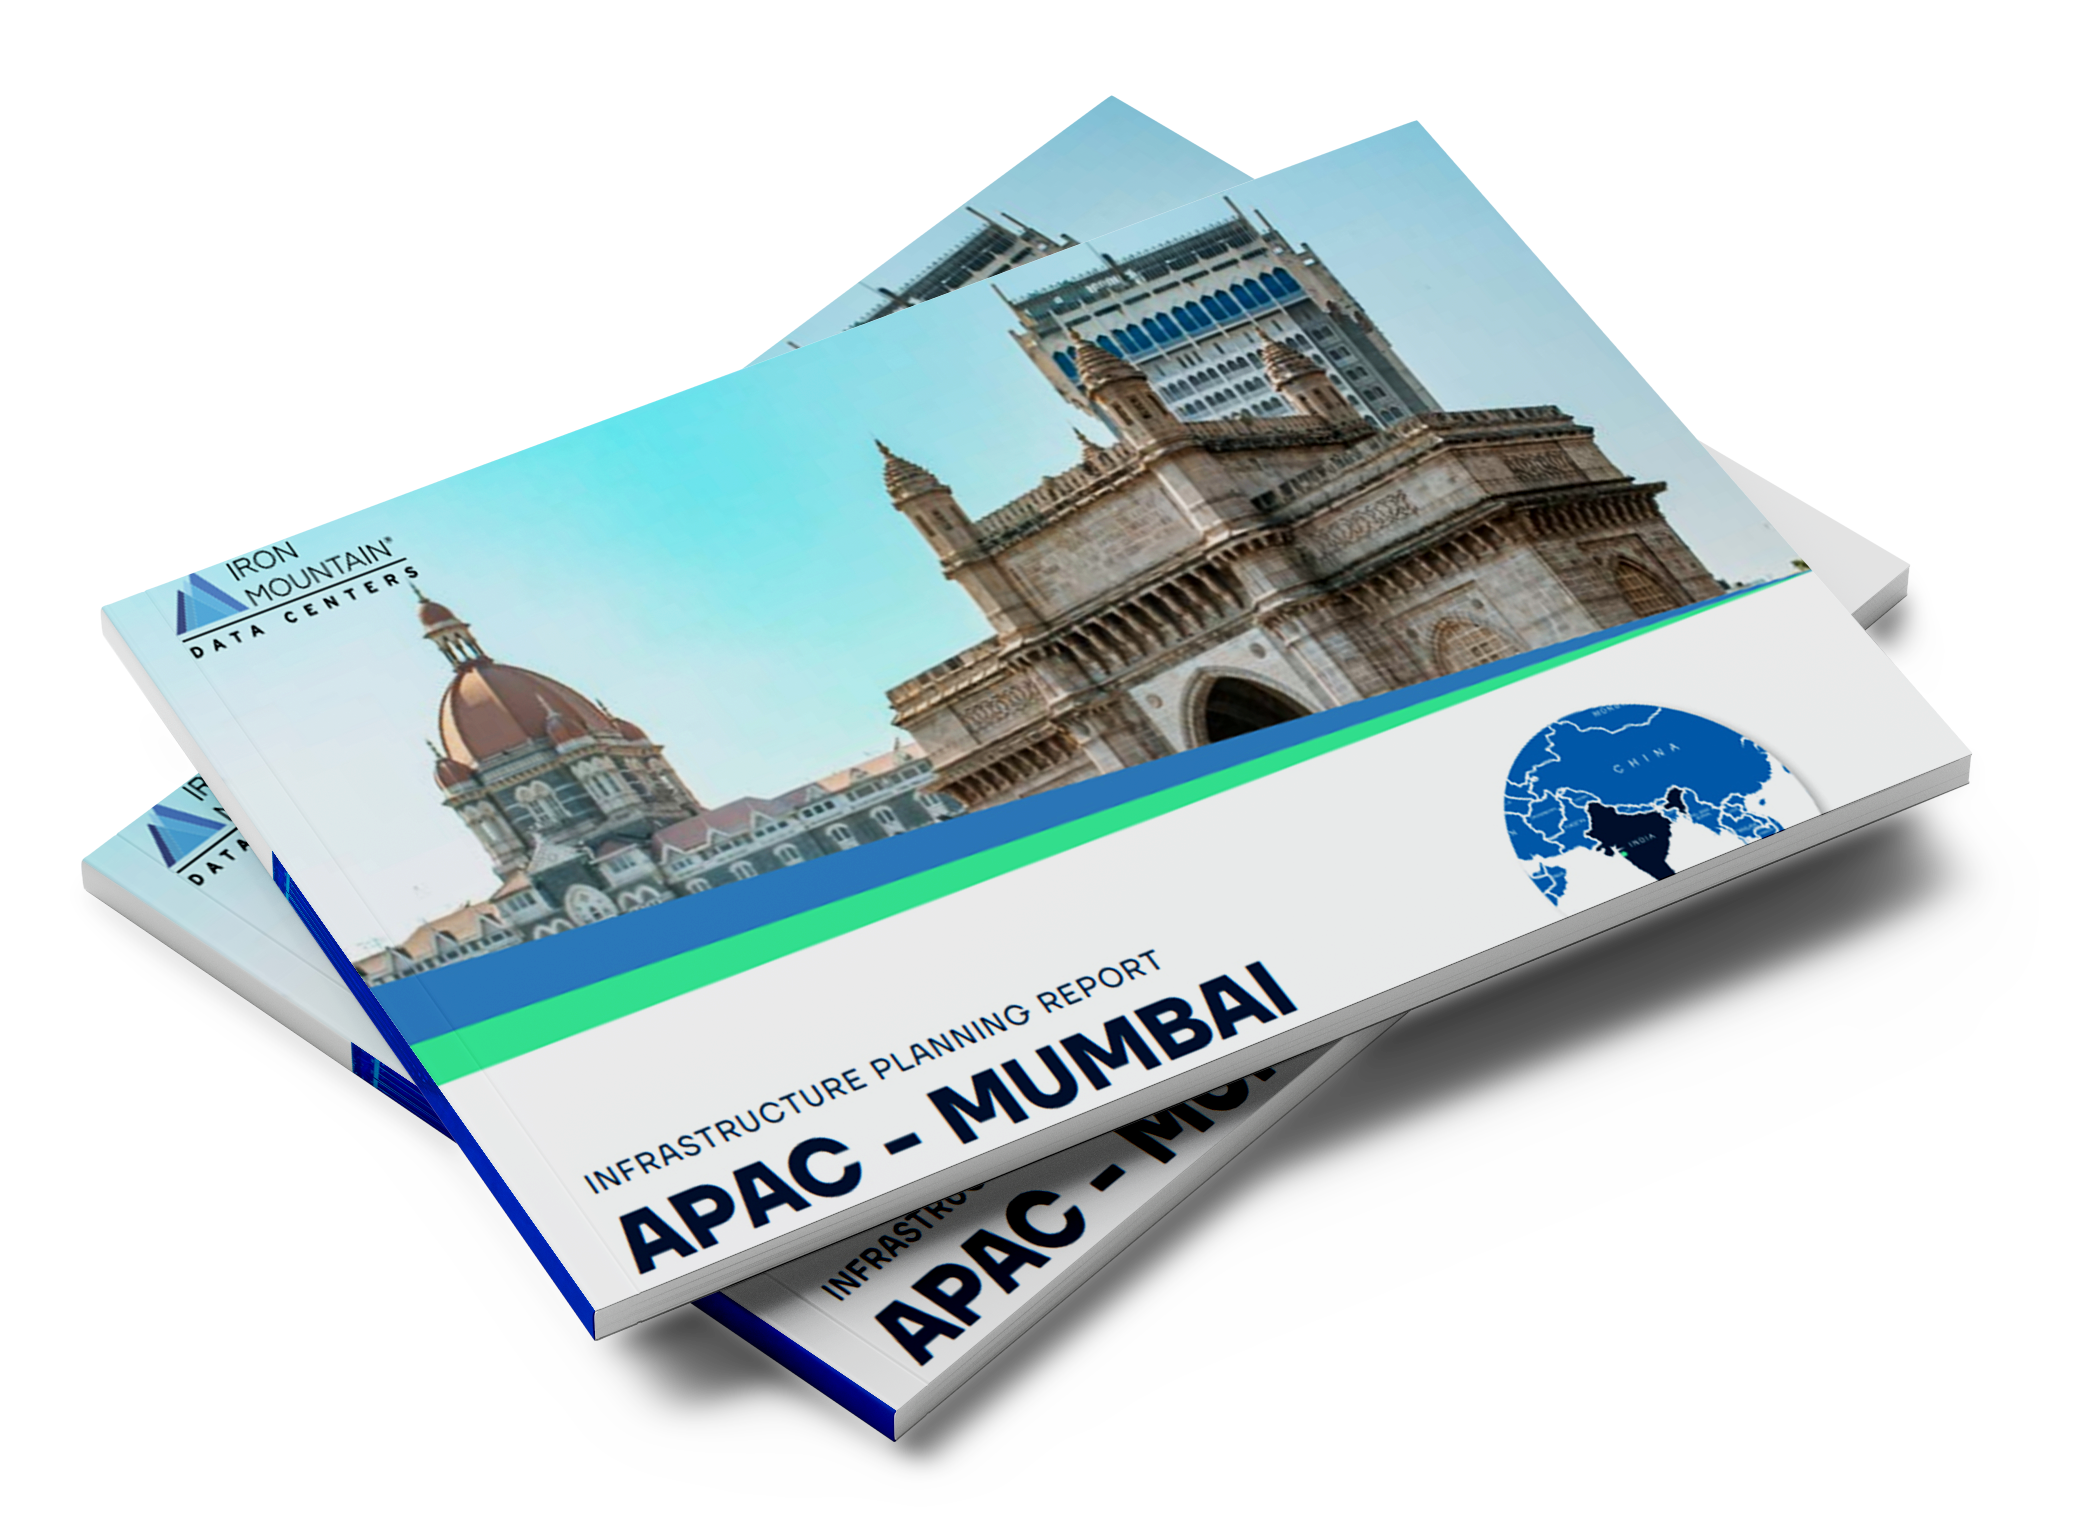 Data Centers Infrastructure Planning Report APAC – Mumbai